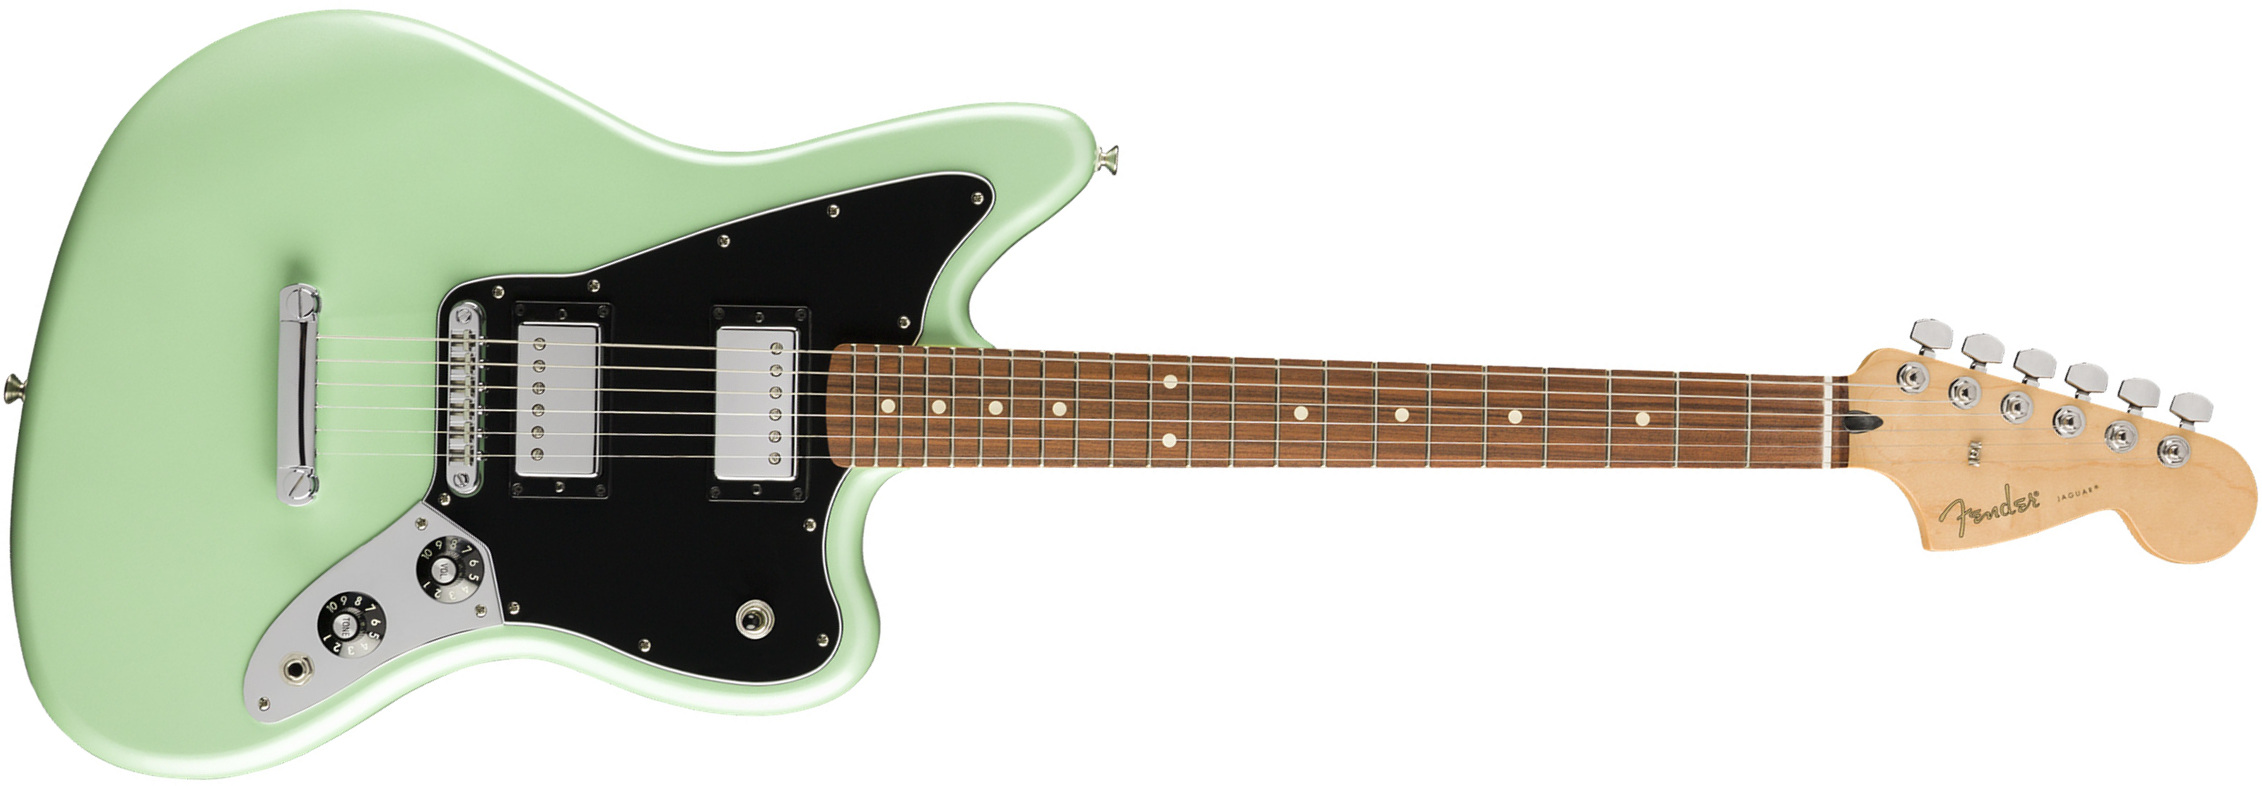 Fender Jaguar Hh Special Edition Player Fsr Mex 2h Ht Pf - Surf Pearl - Retro-rock elektrische gitaar - Main picture